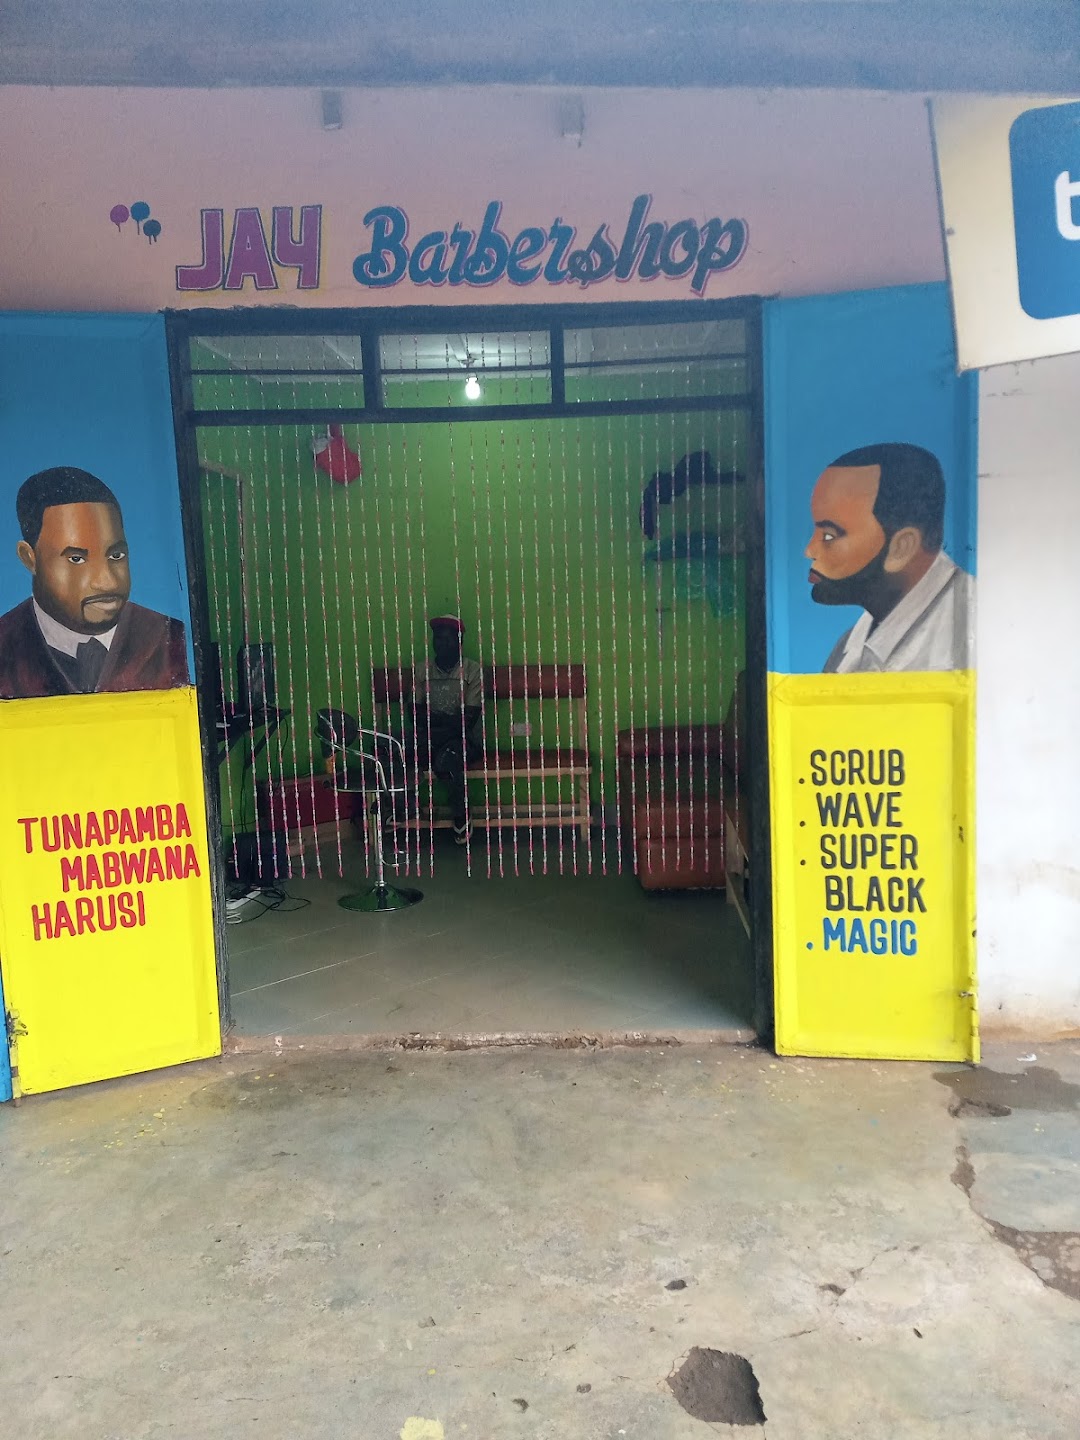 Jay barbershop